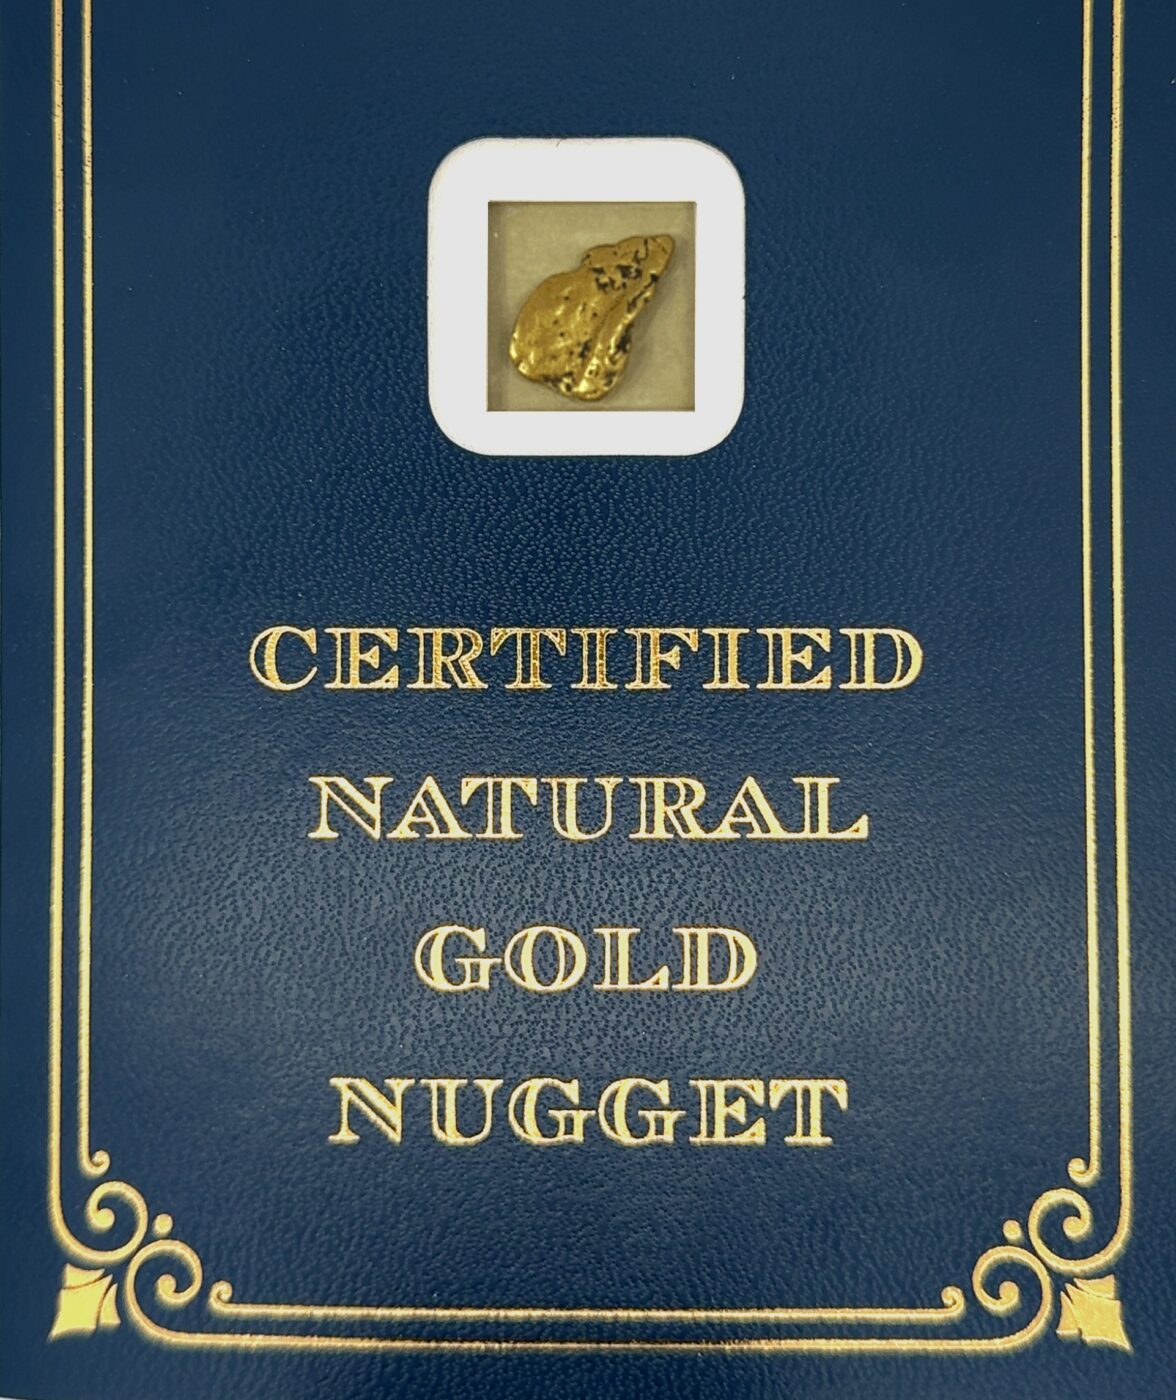 3.1 Gram Natural Gold Nugget from Trapper Creek Alaska, Alaska Mint